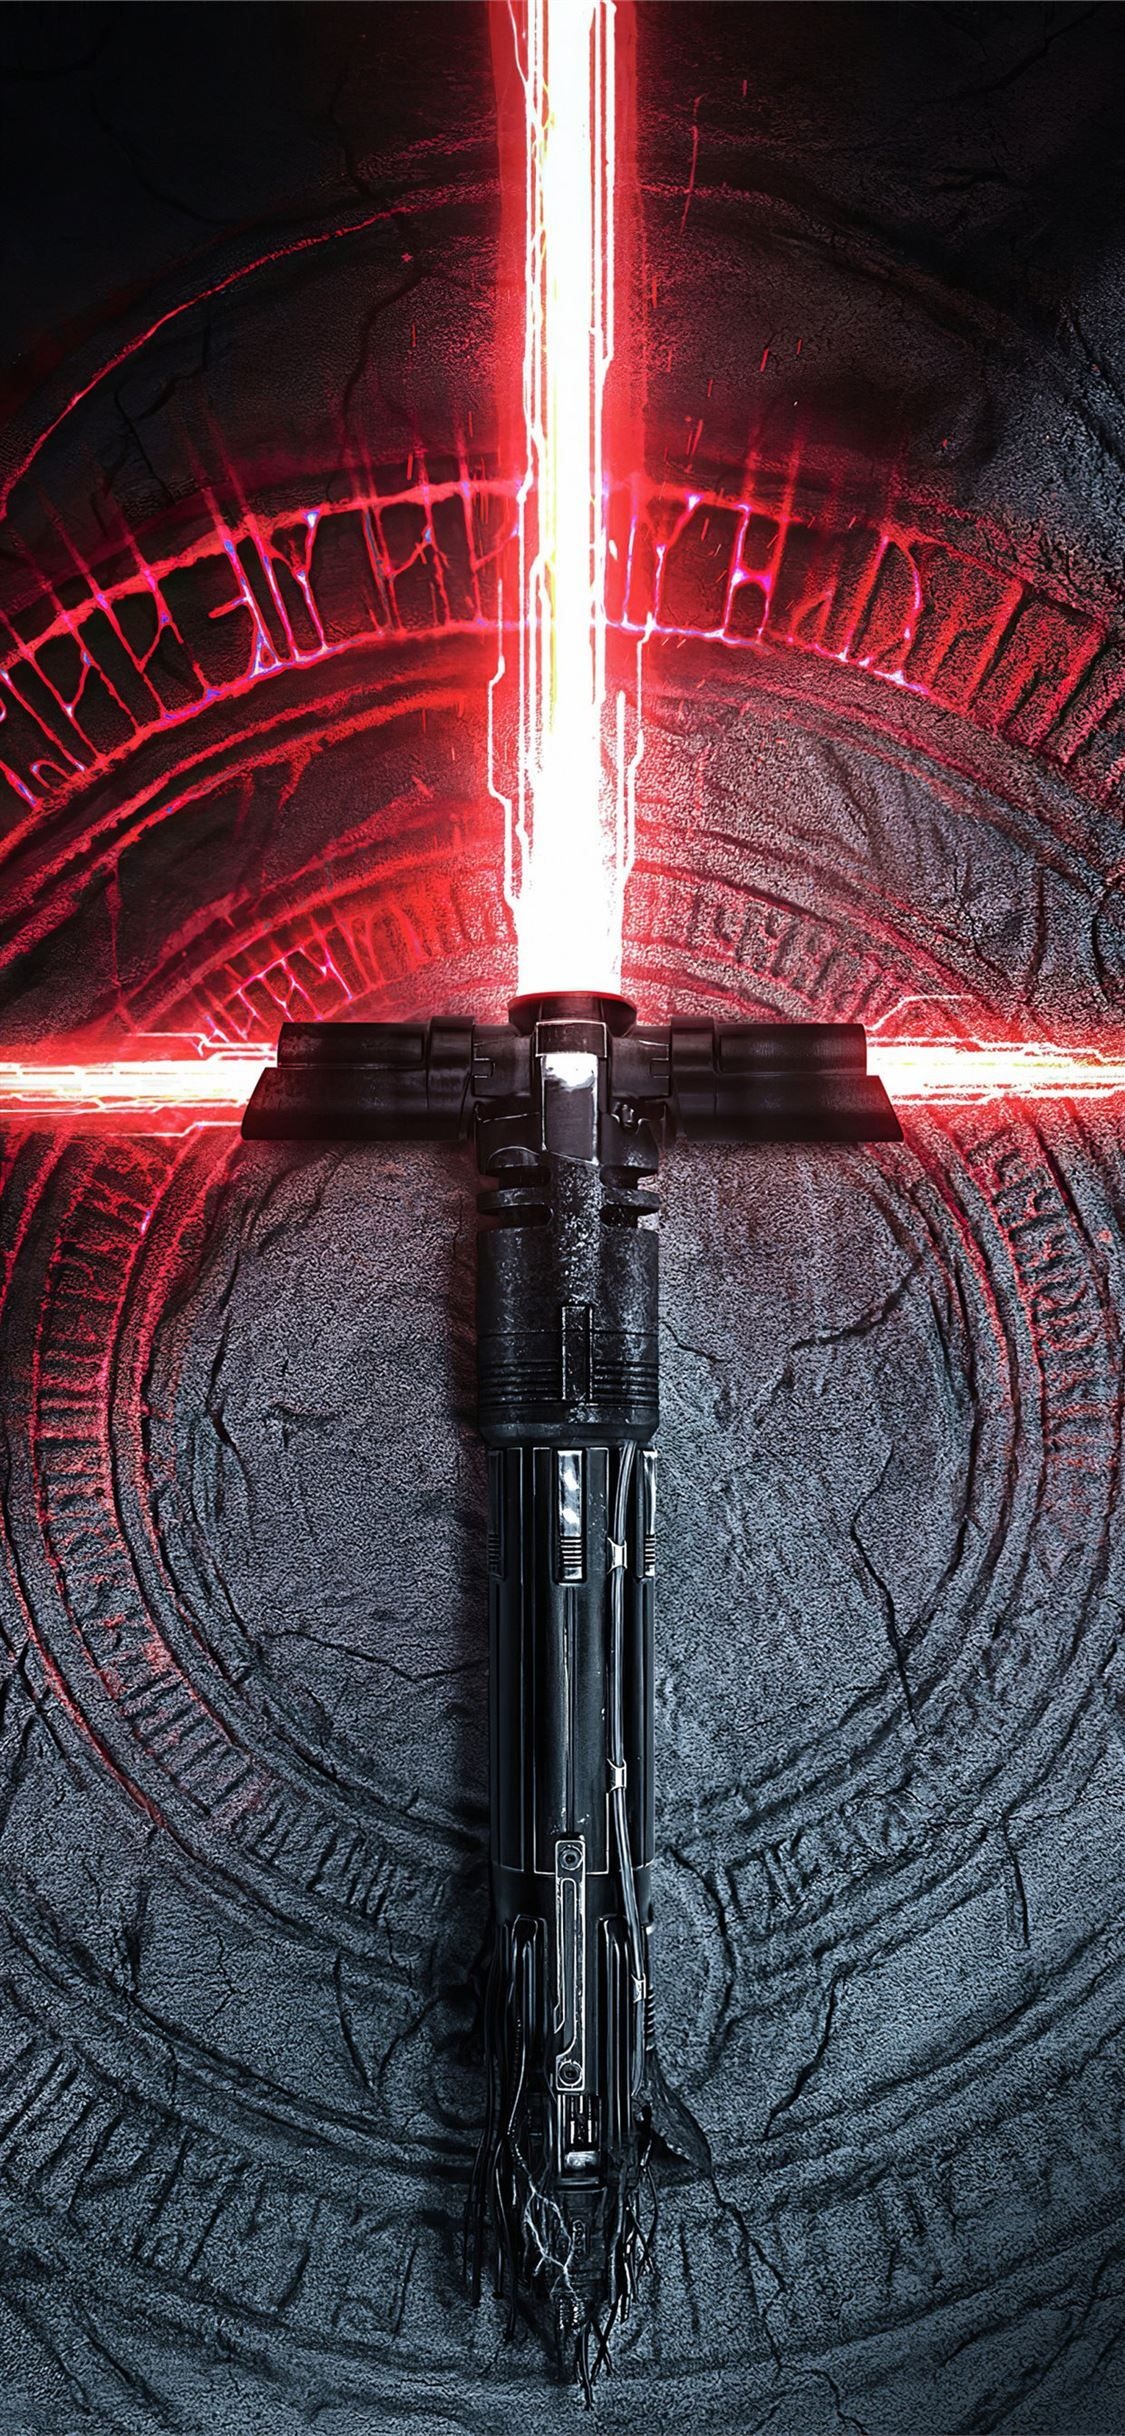 Kylo Ren's lightsaber in action, Star Wars movie scenes, Epic battle sequences, Cinematic 4K wallpaper, 1130x2440 HD Handy